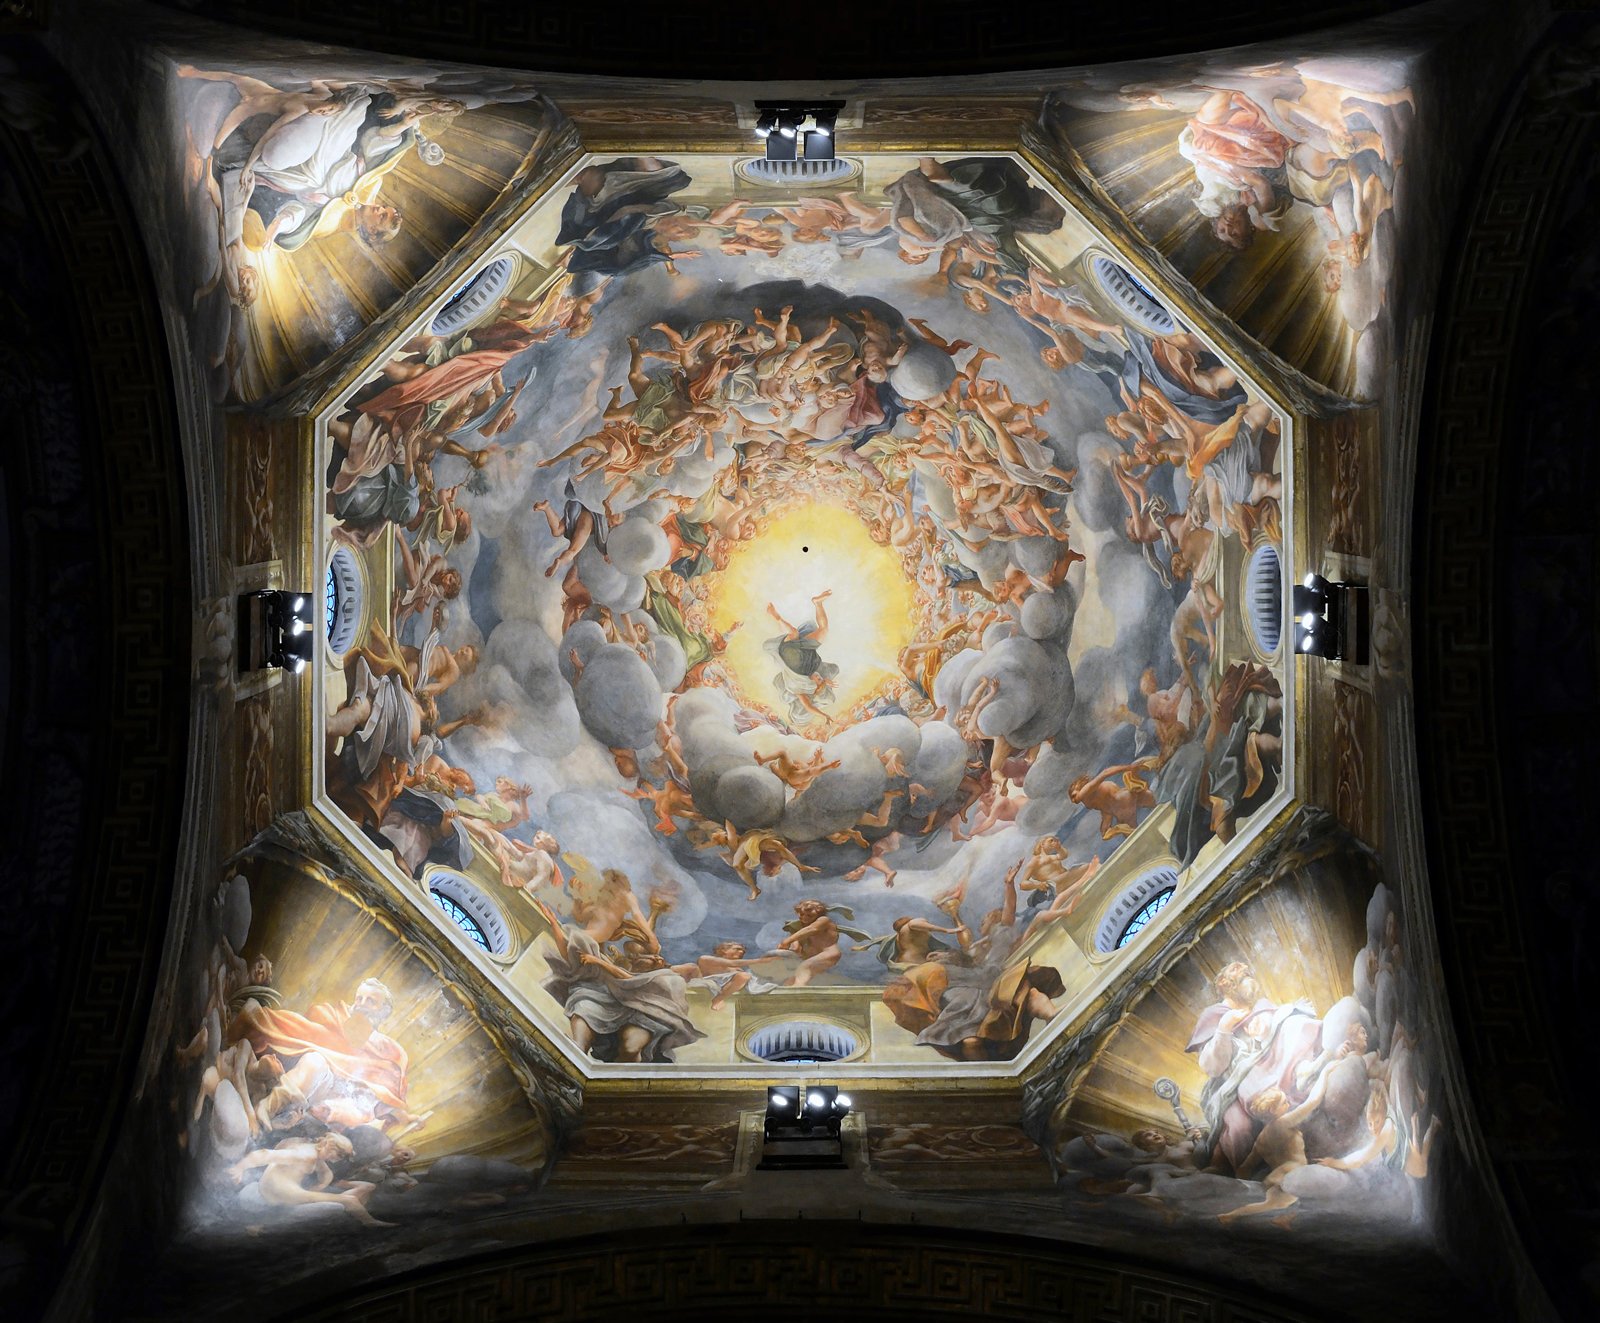 Correggio's glorious vault frescoes in Parma cathedral (image: Livio Andronico)